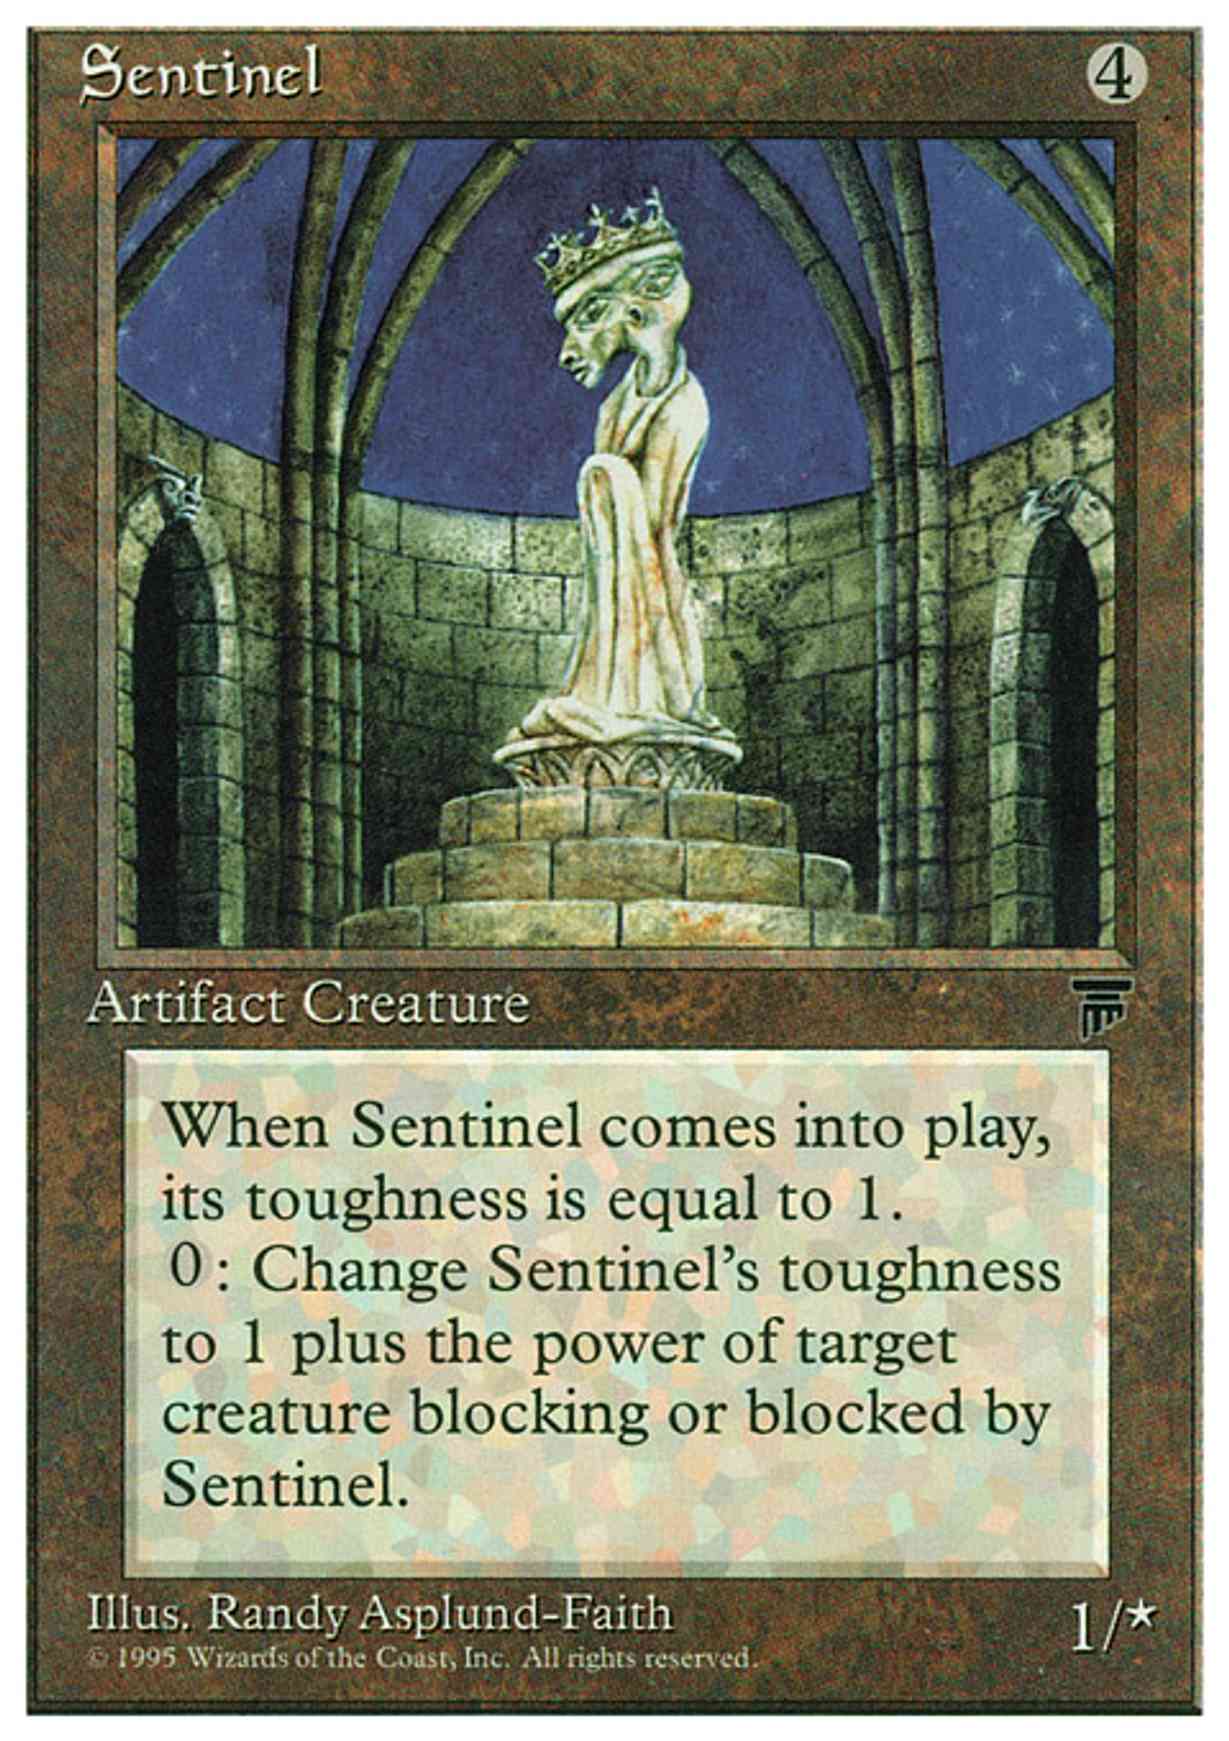 Sentinel magic card front